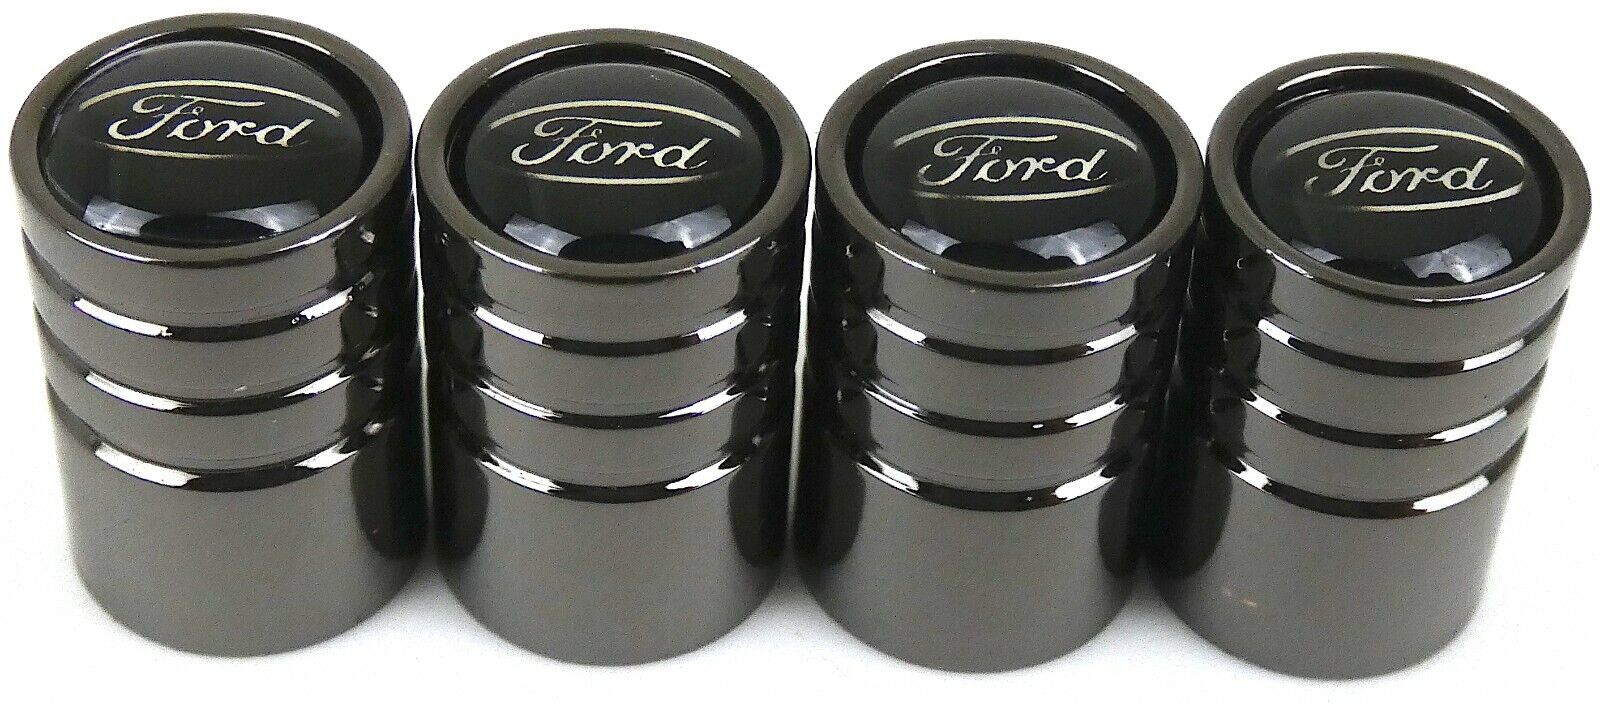 4x Ford Tire Valve Stem Caps For Car, Truck Universal Fitting (Metallic Black)